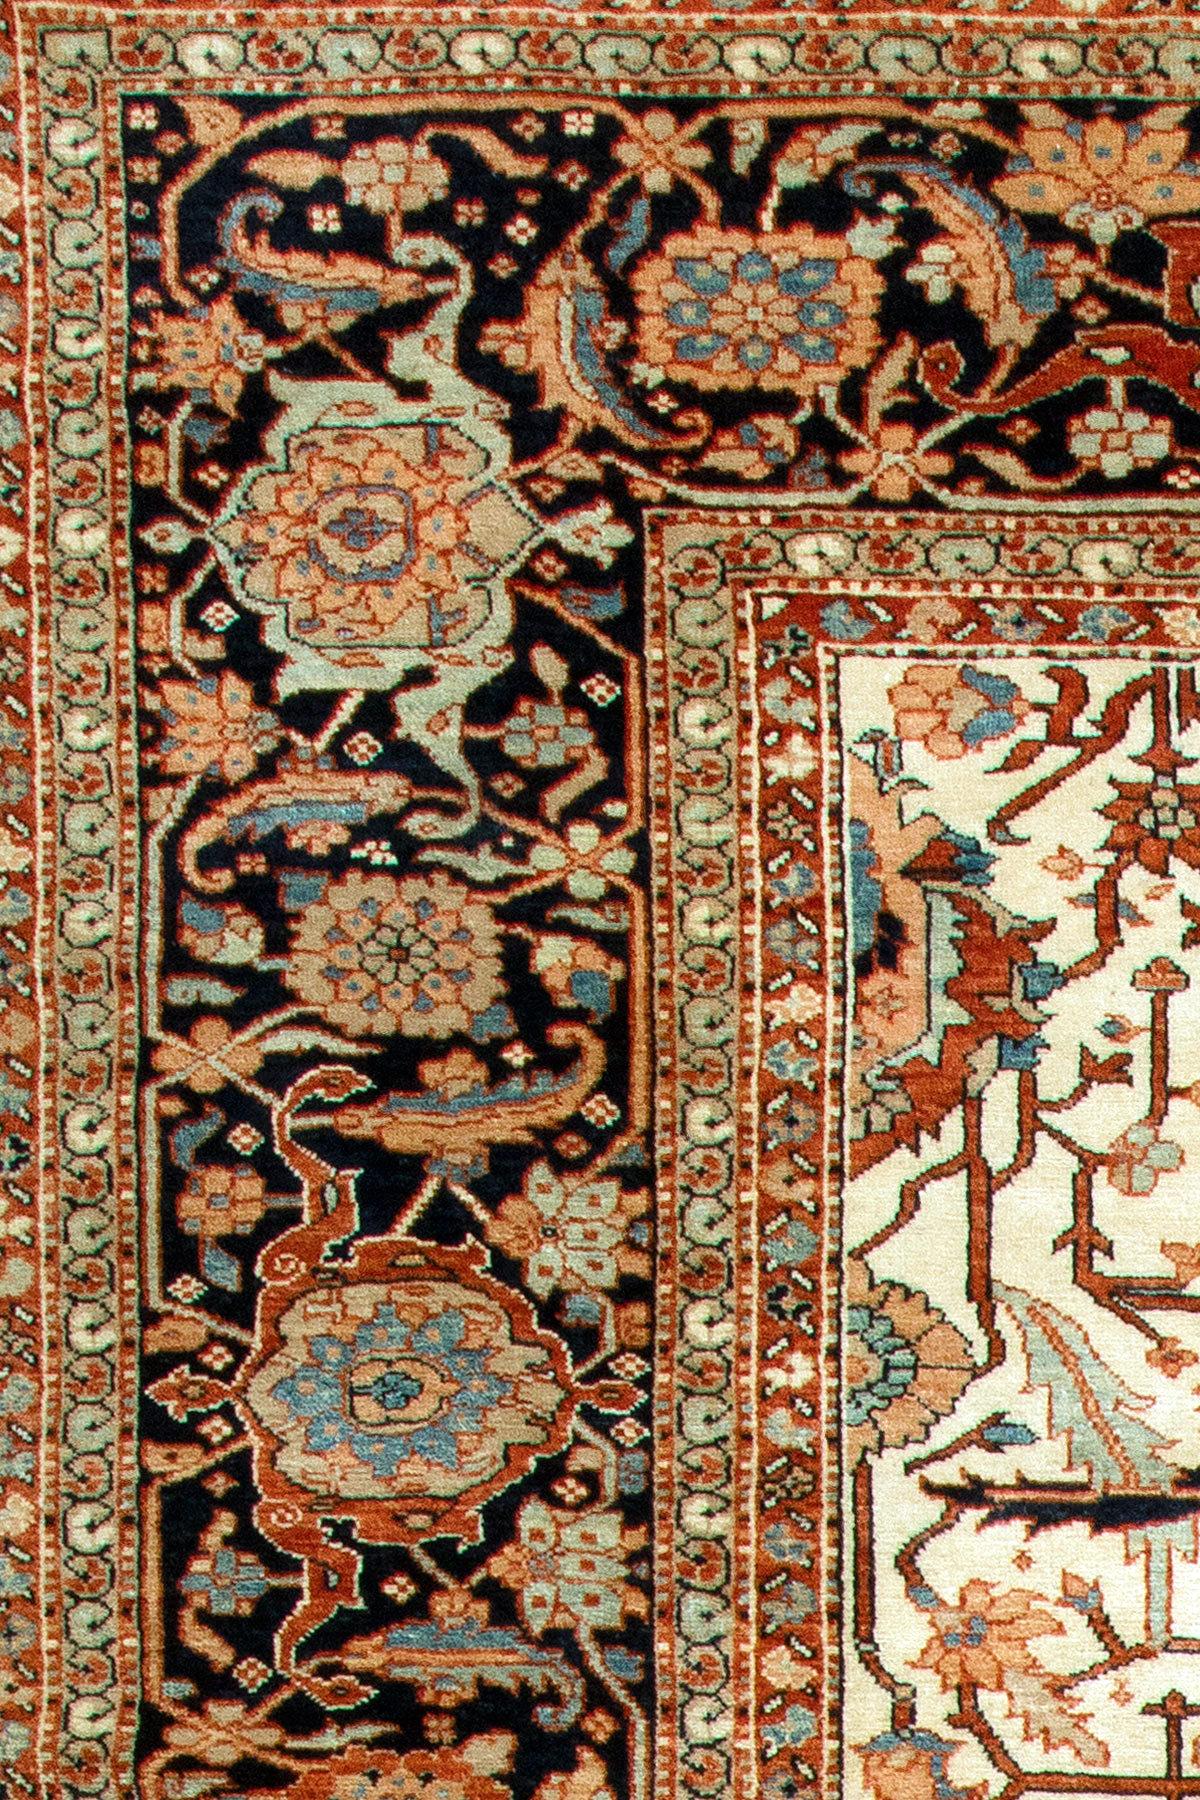 Vibrant oversize vintage Persian Heriz carpet.

Measures: 14' x 17'10''.

